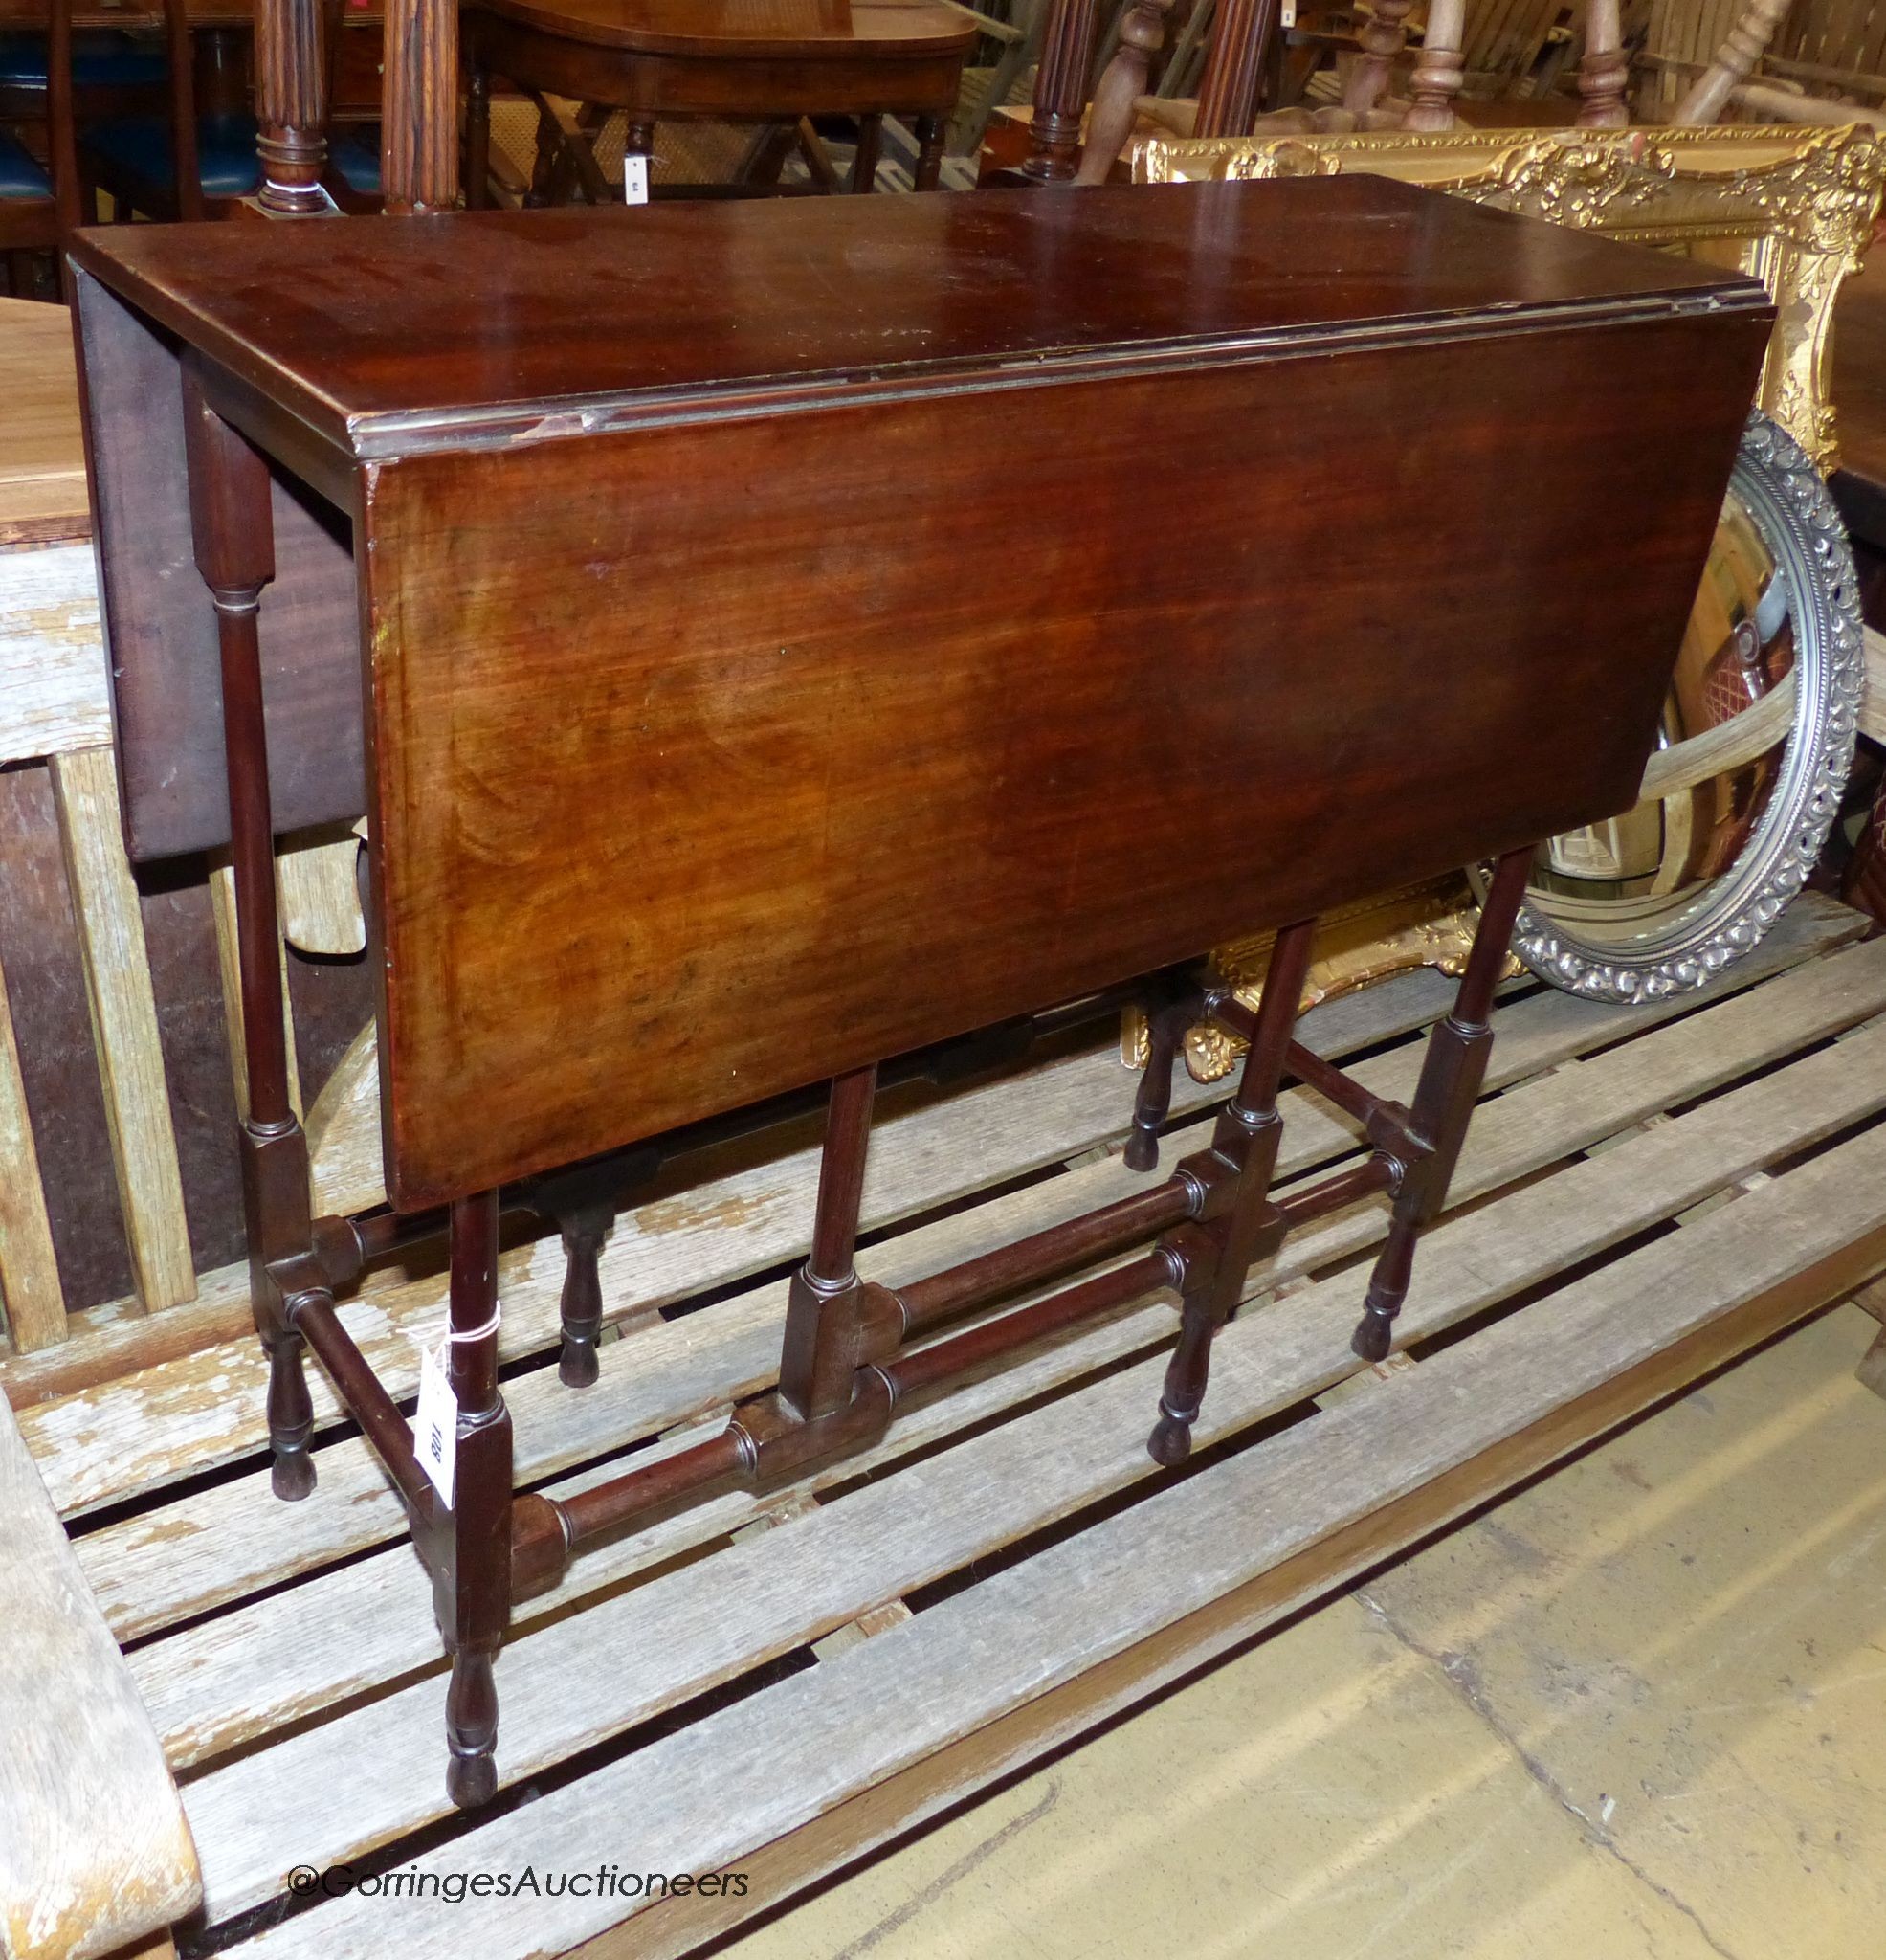 An Edwardian mahogany spider leg table, width 76cm, depth 29cm, height 70cm